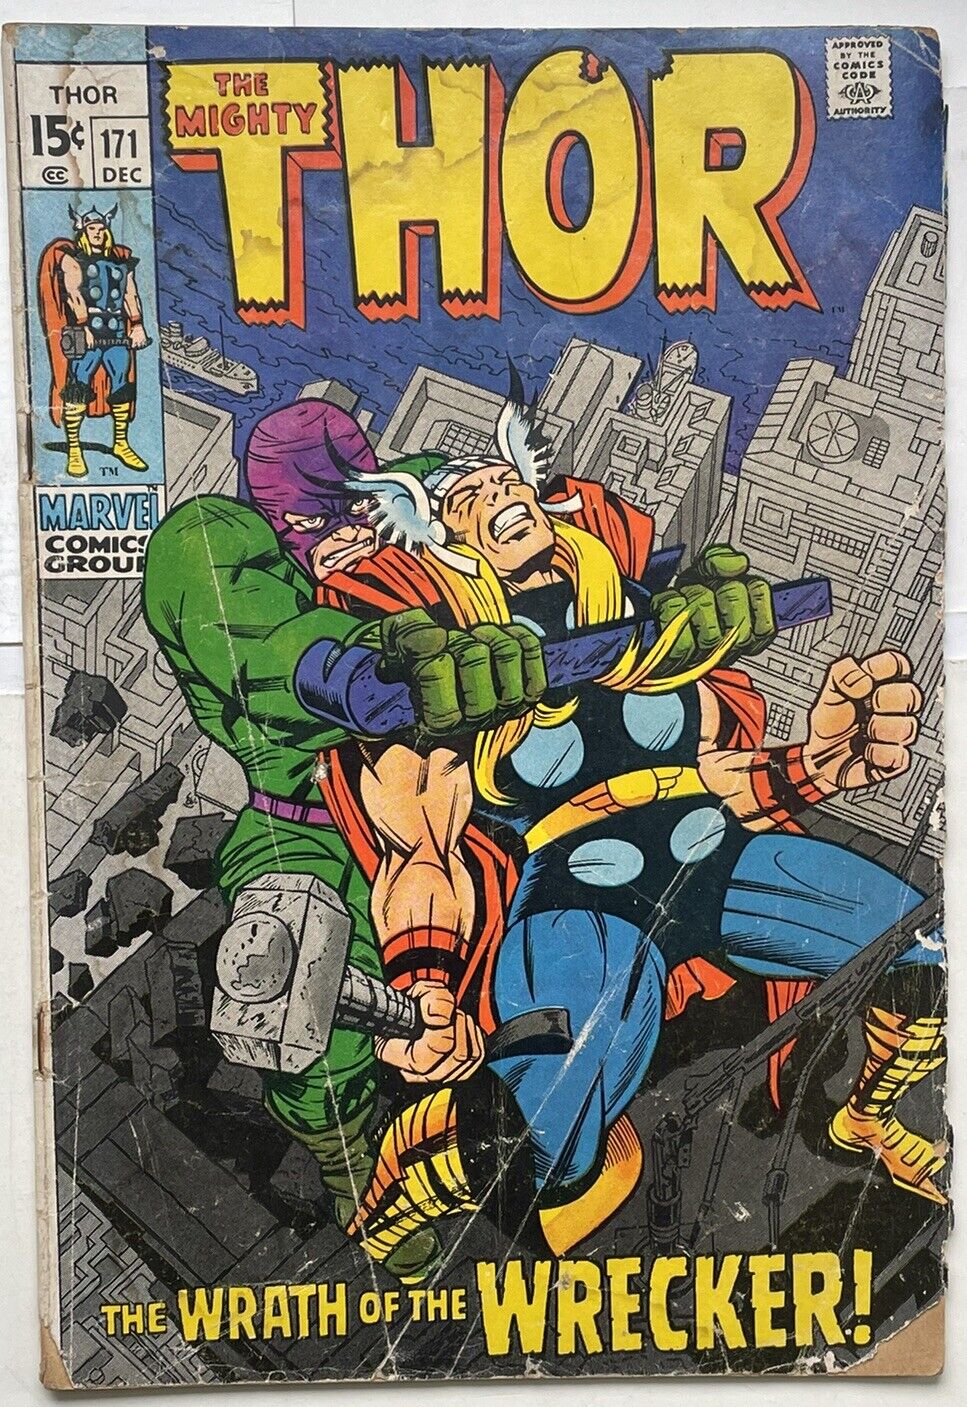 The Mighty Thor #171 -Marvel Comics -1969